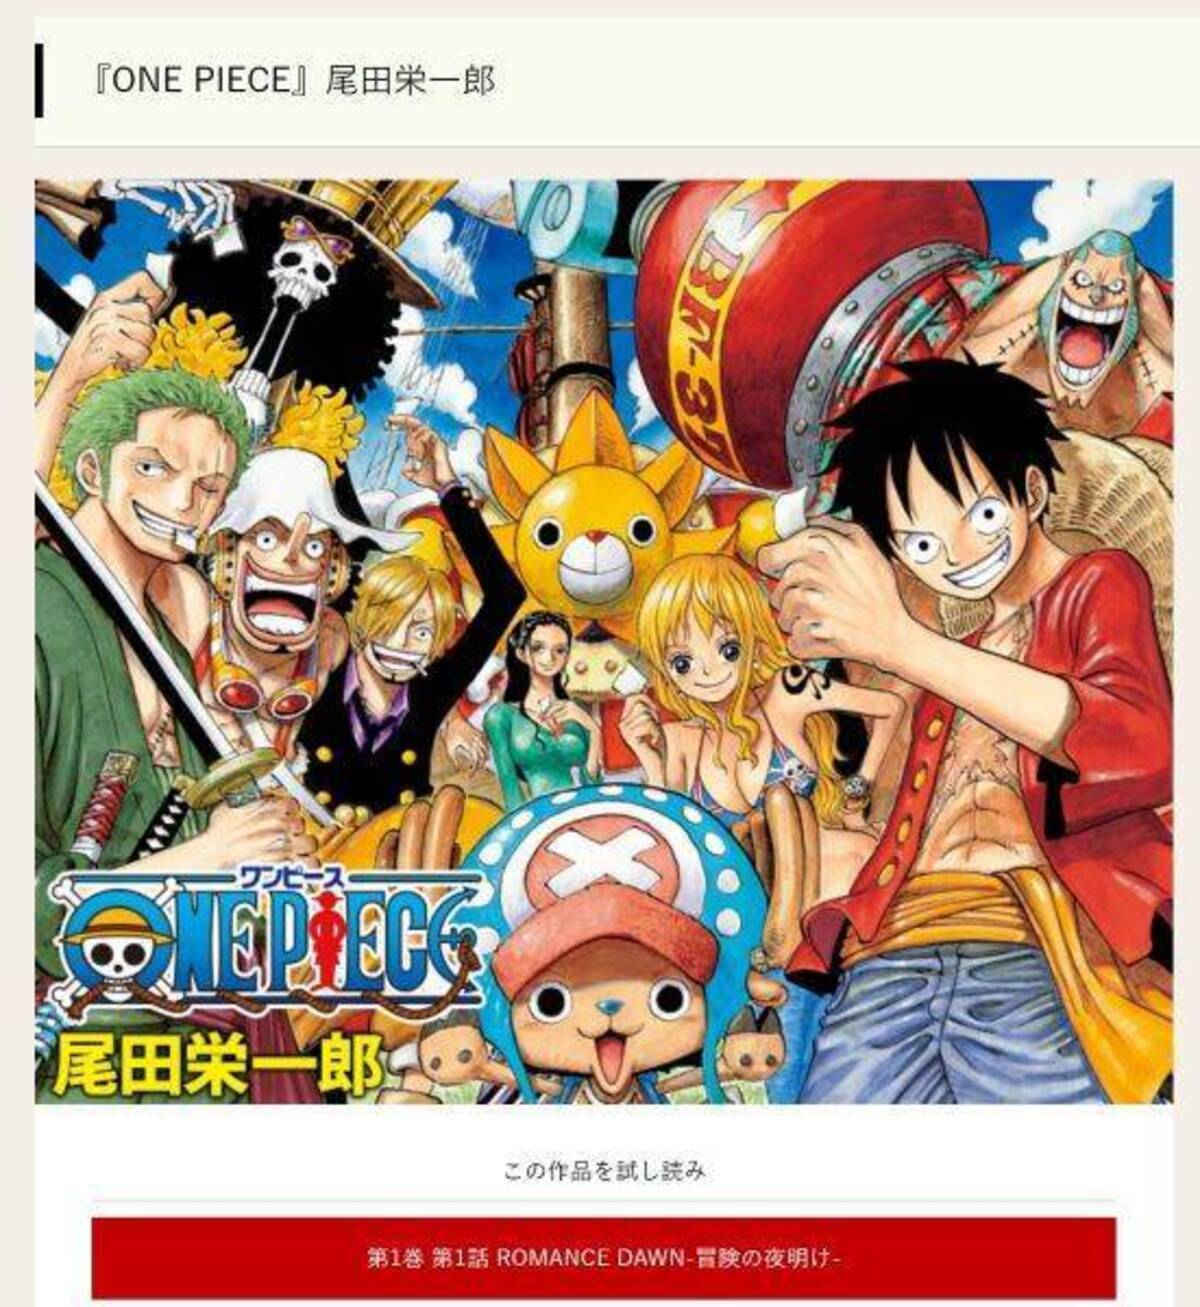 One Piece 最終章 全ては空白の100年に繋がる 謎を解き明かす４つの要素 22年7月24日 エキサイトニュース 4 8